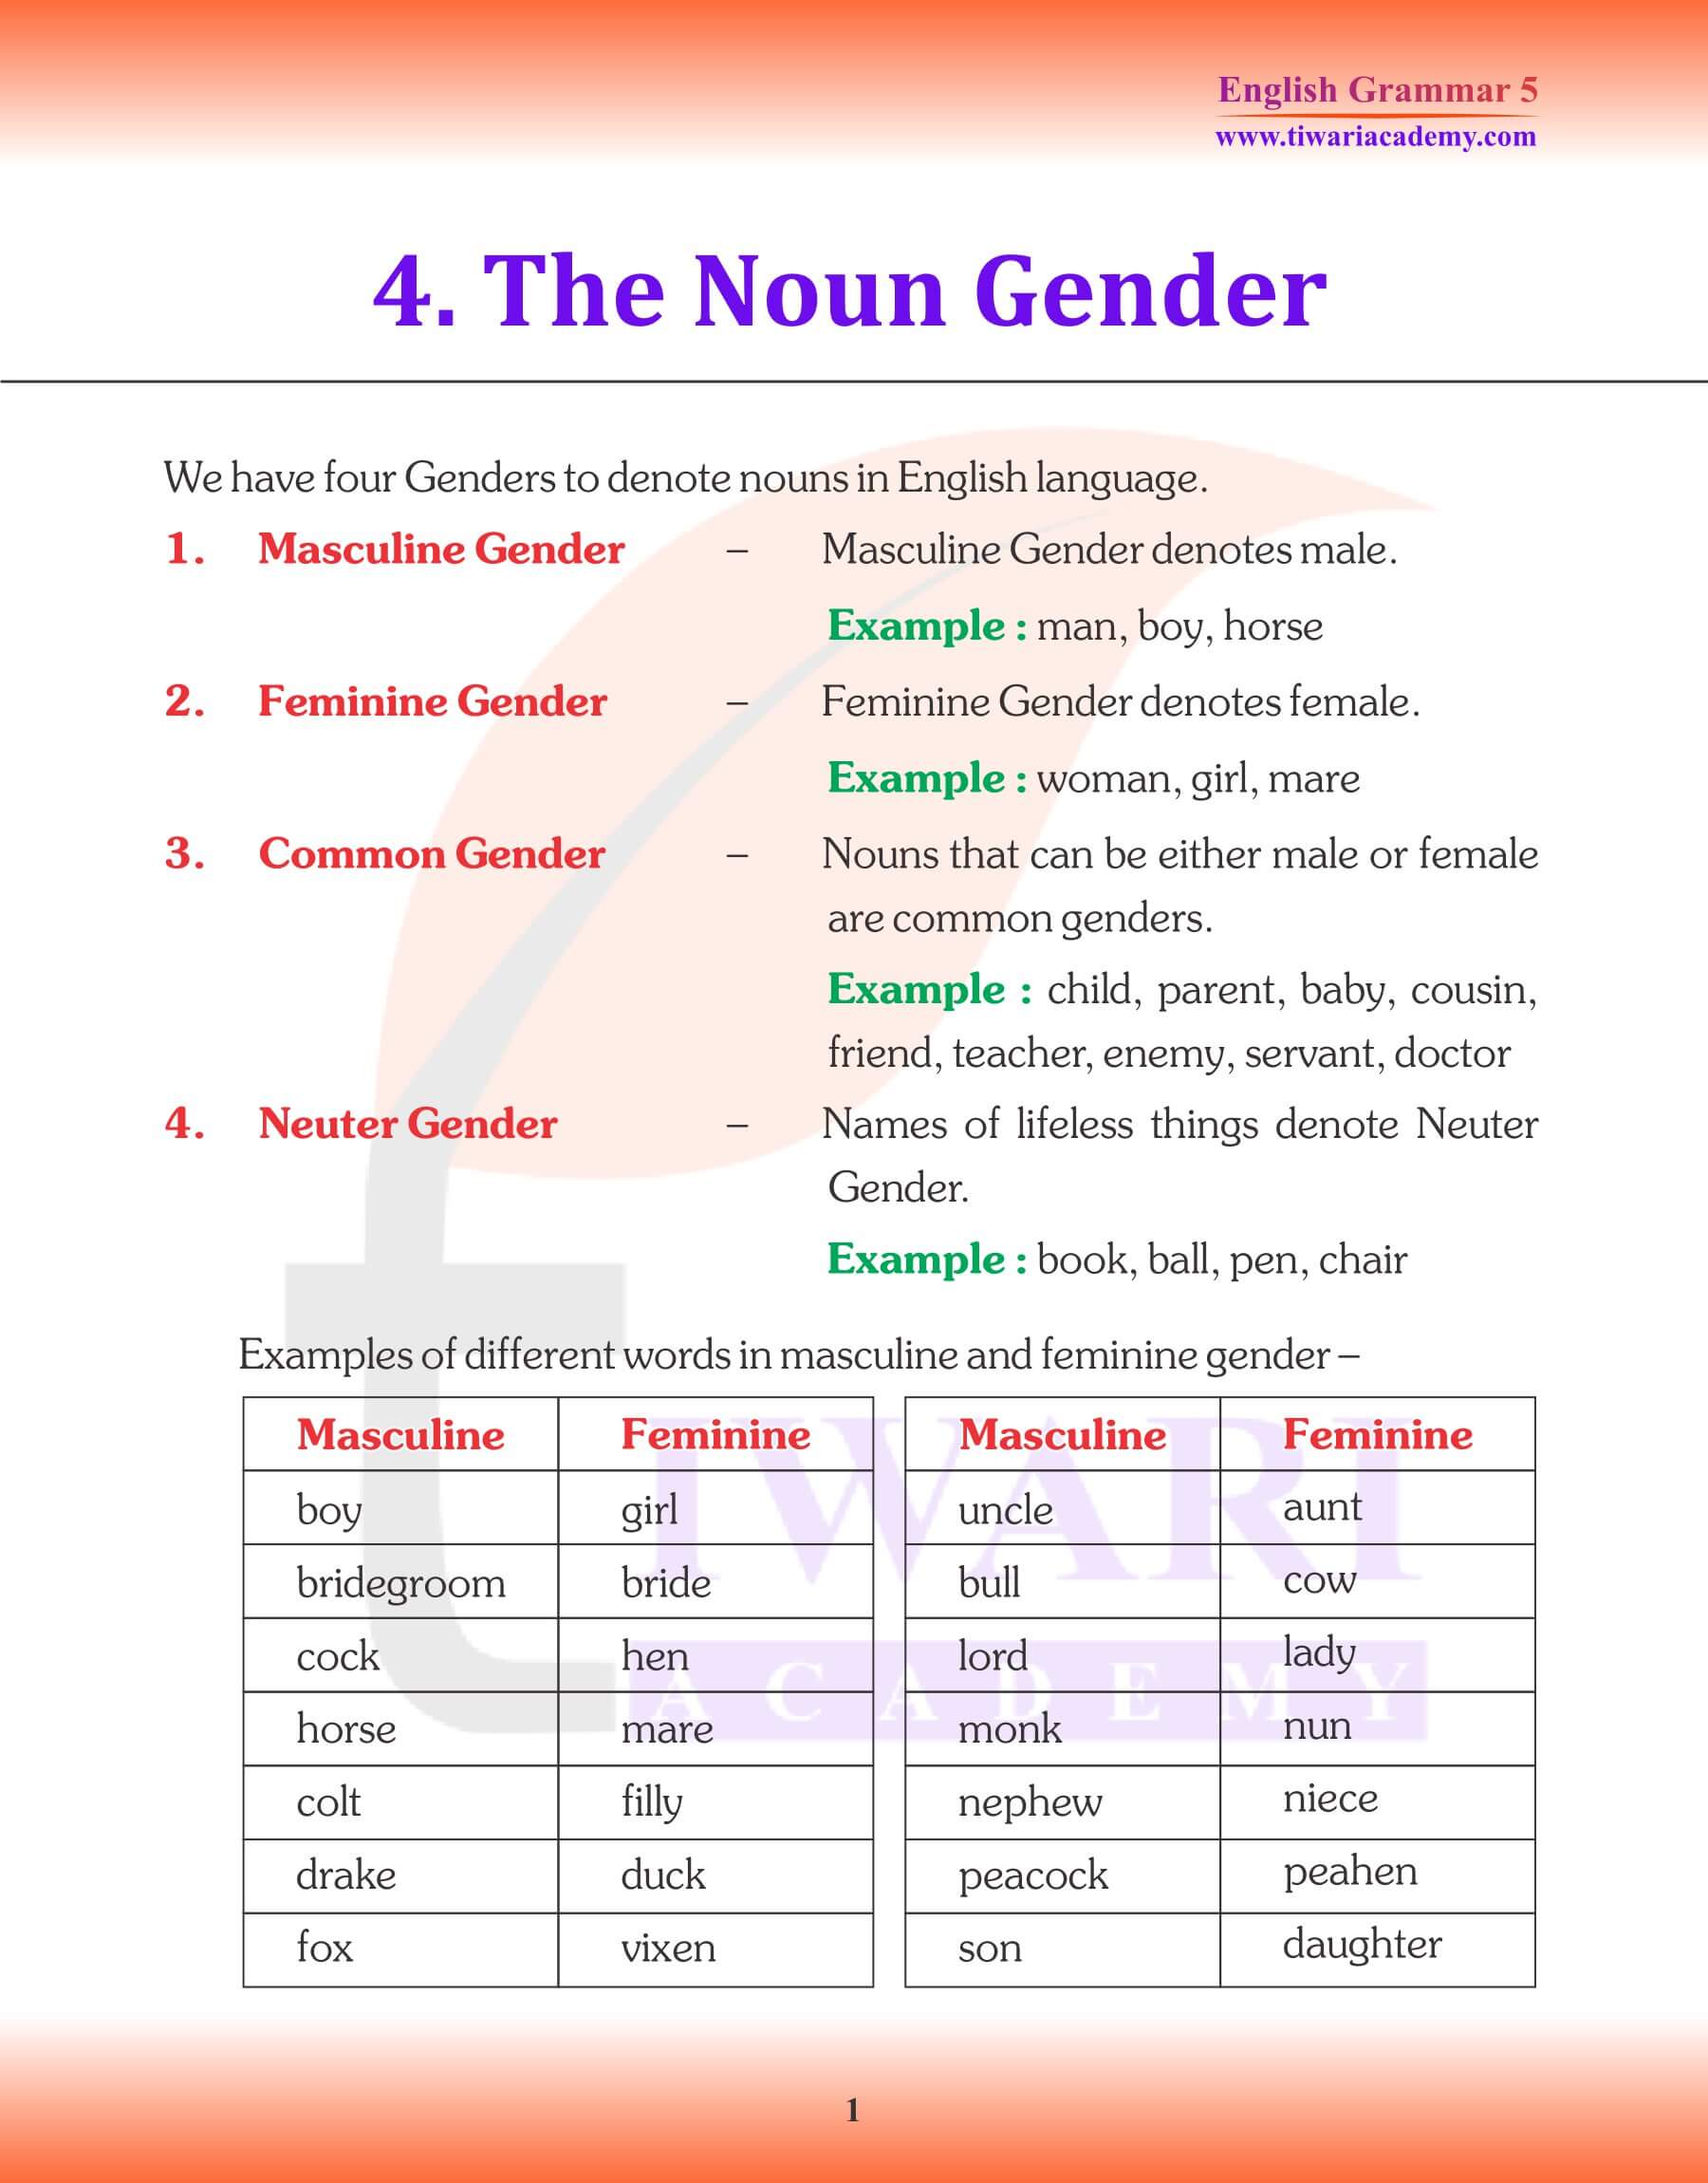 Class 5 English Grammar Noun Gender Revision Book